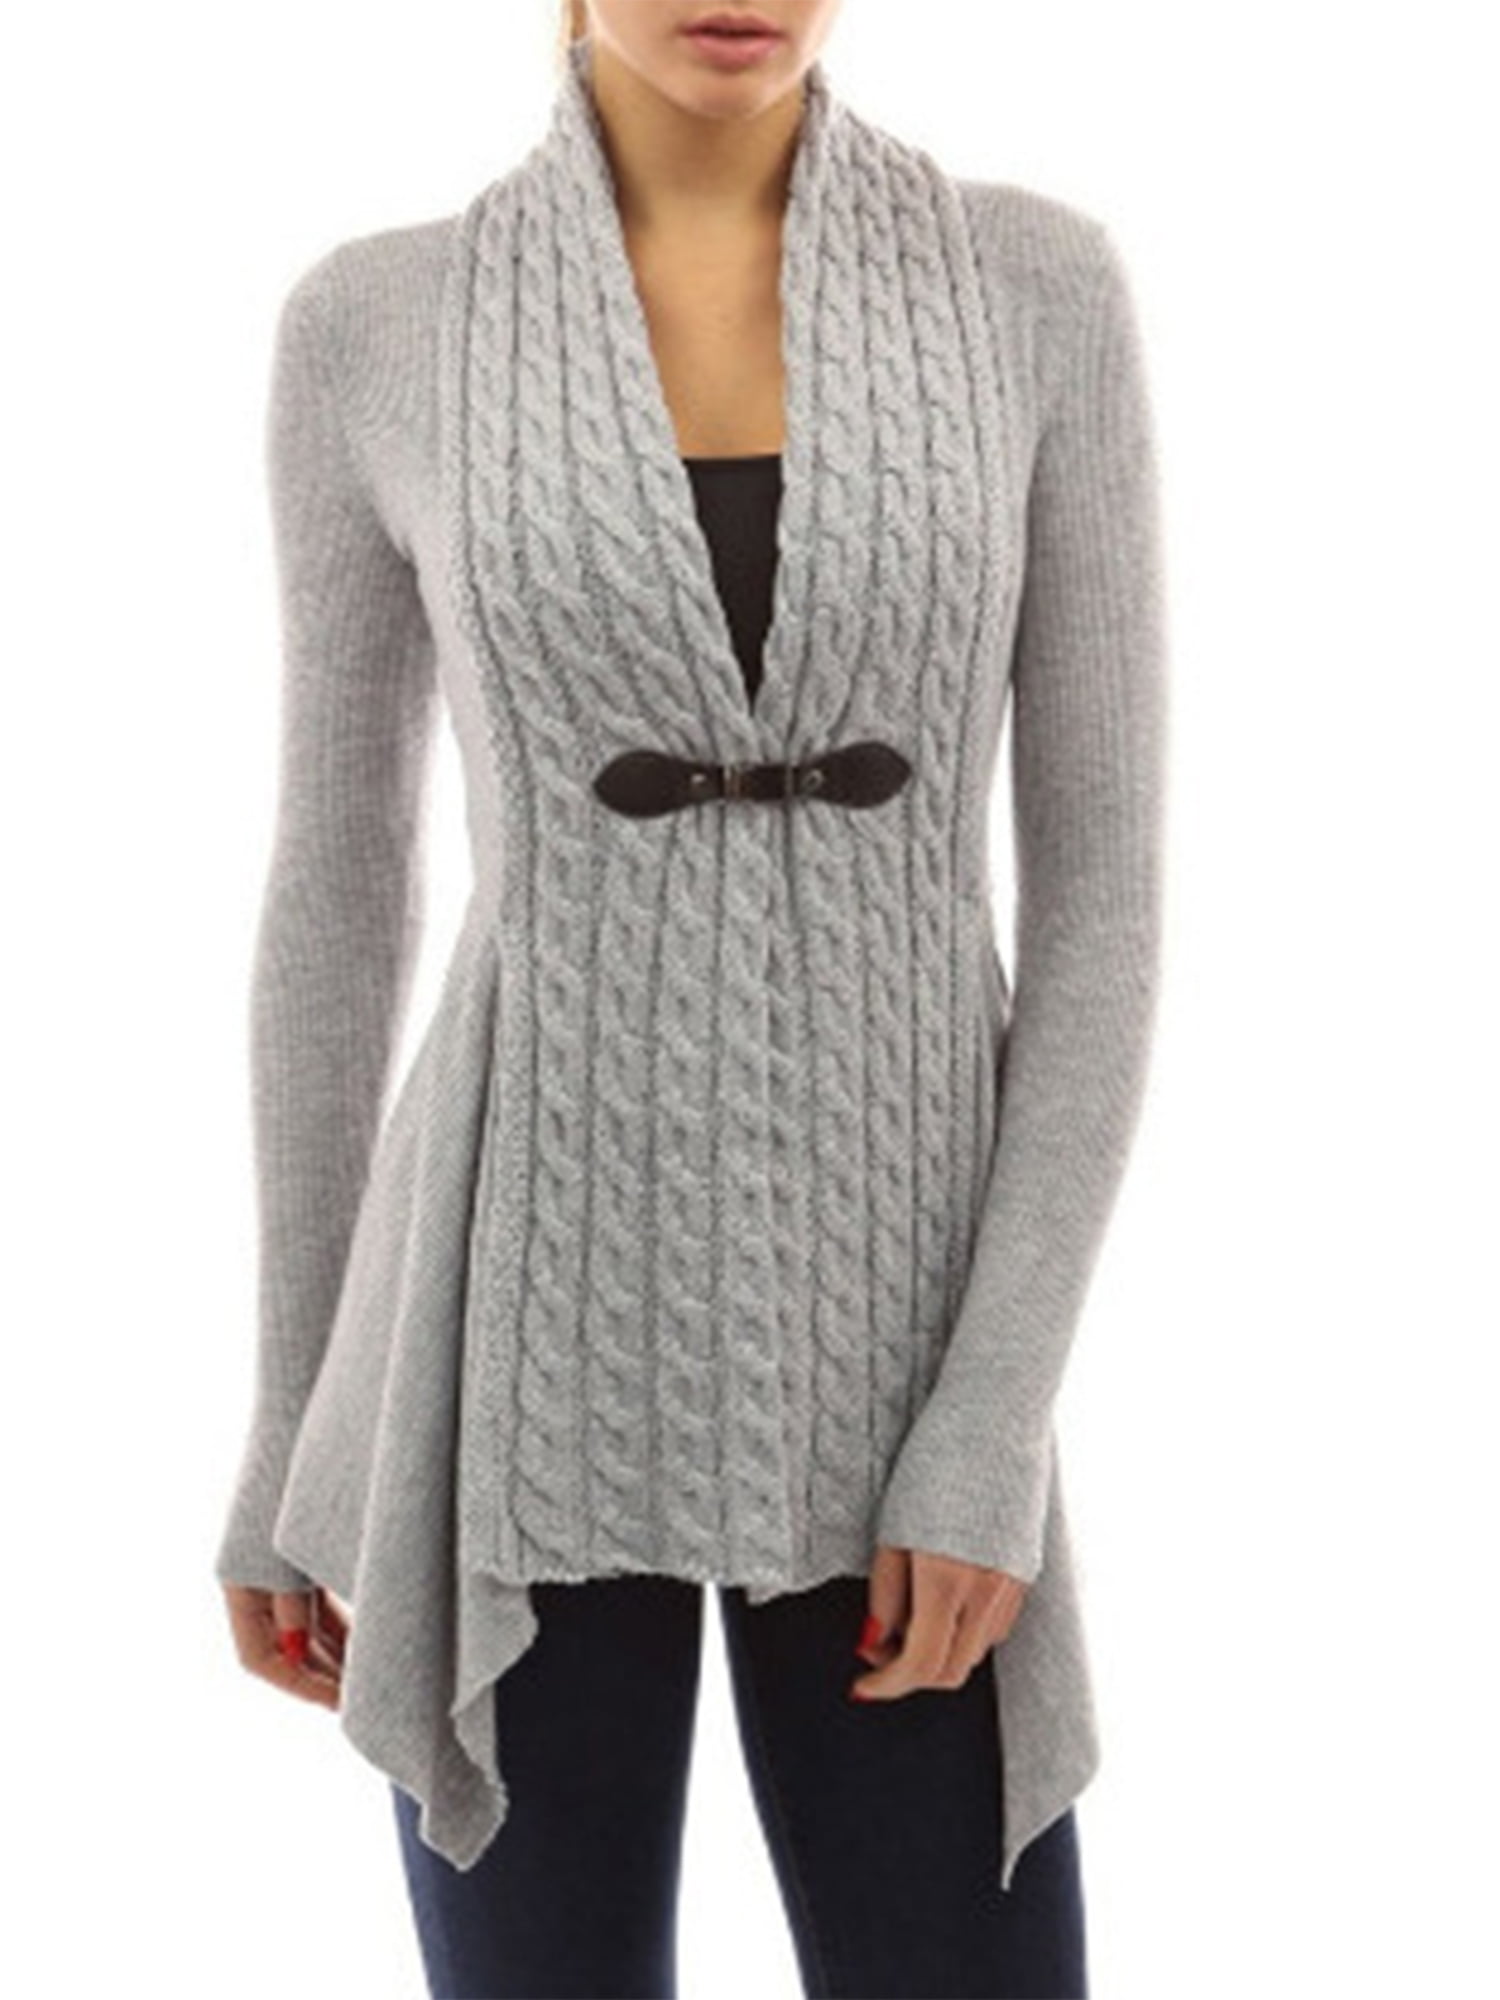 Womens Irregular Knitted Cardigan Sweater Knitwear Coat Jacket Outwear Pullover